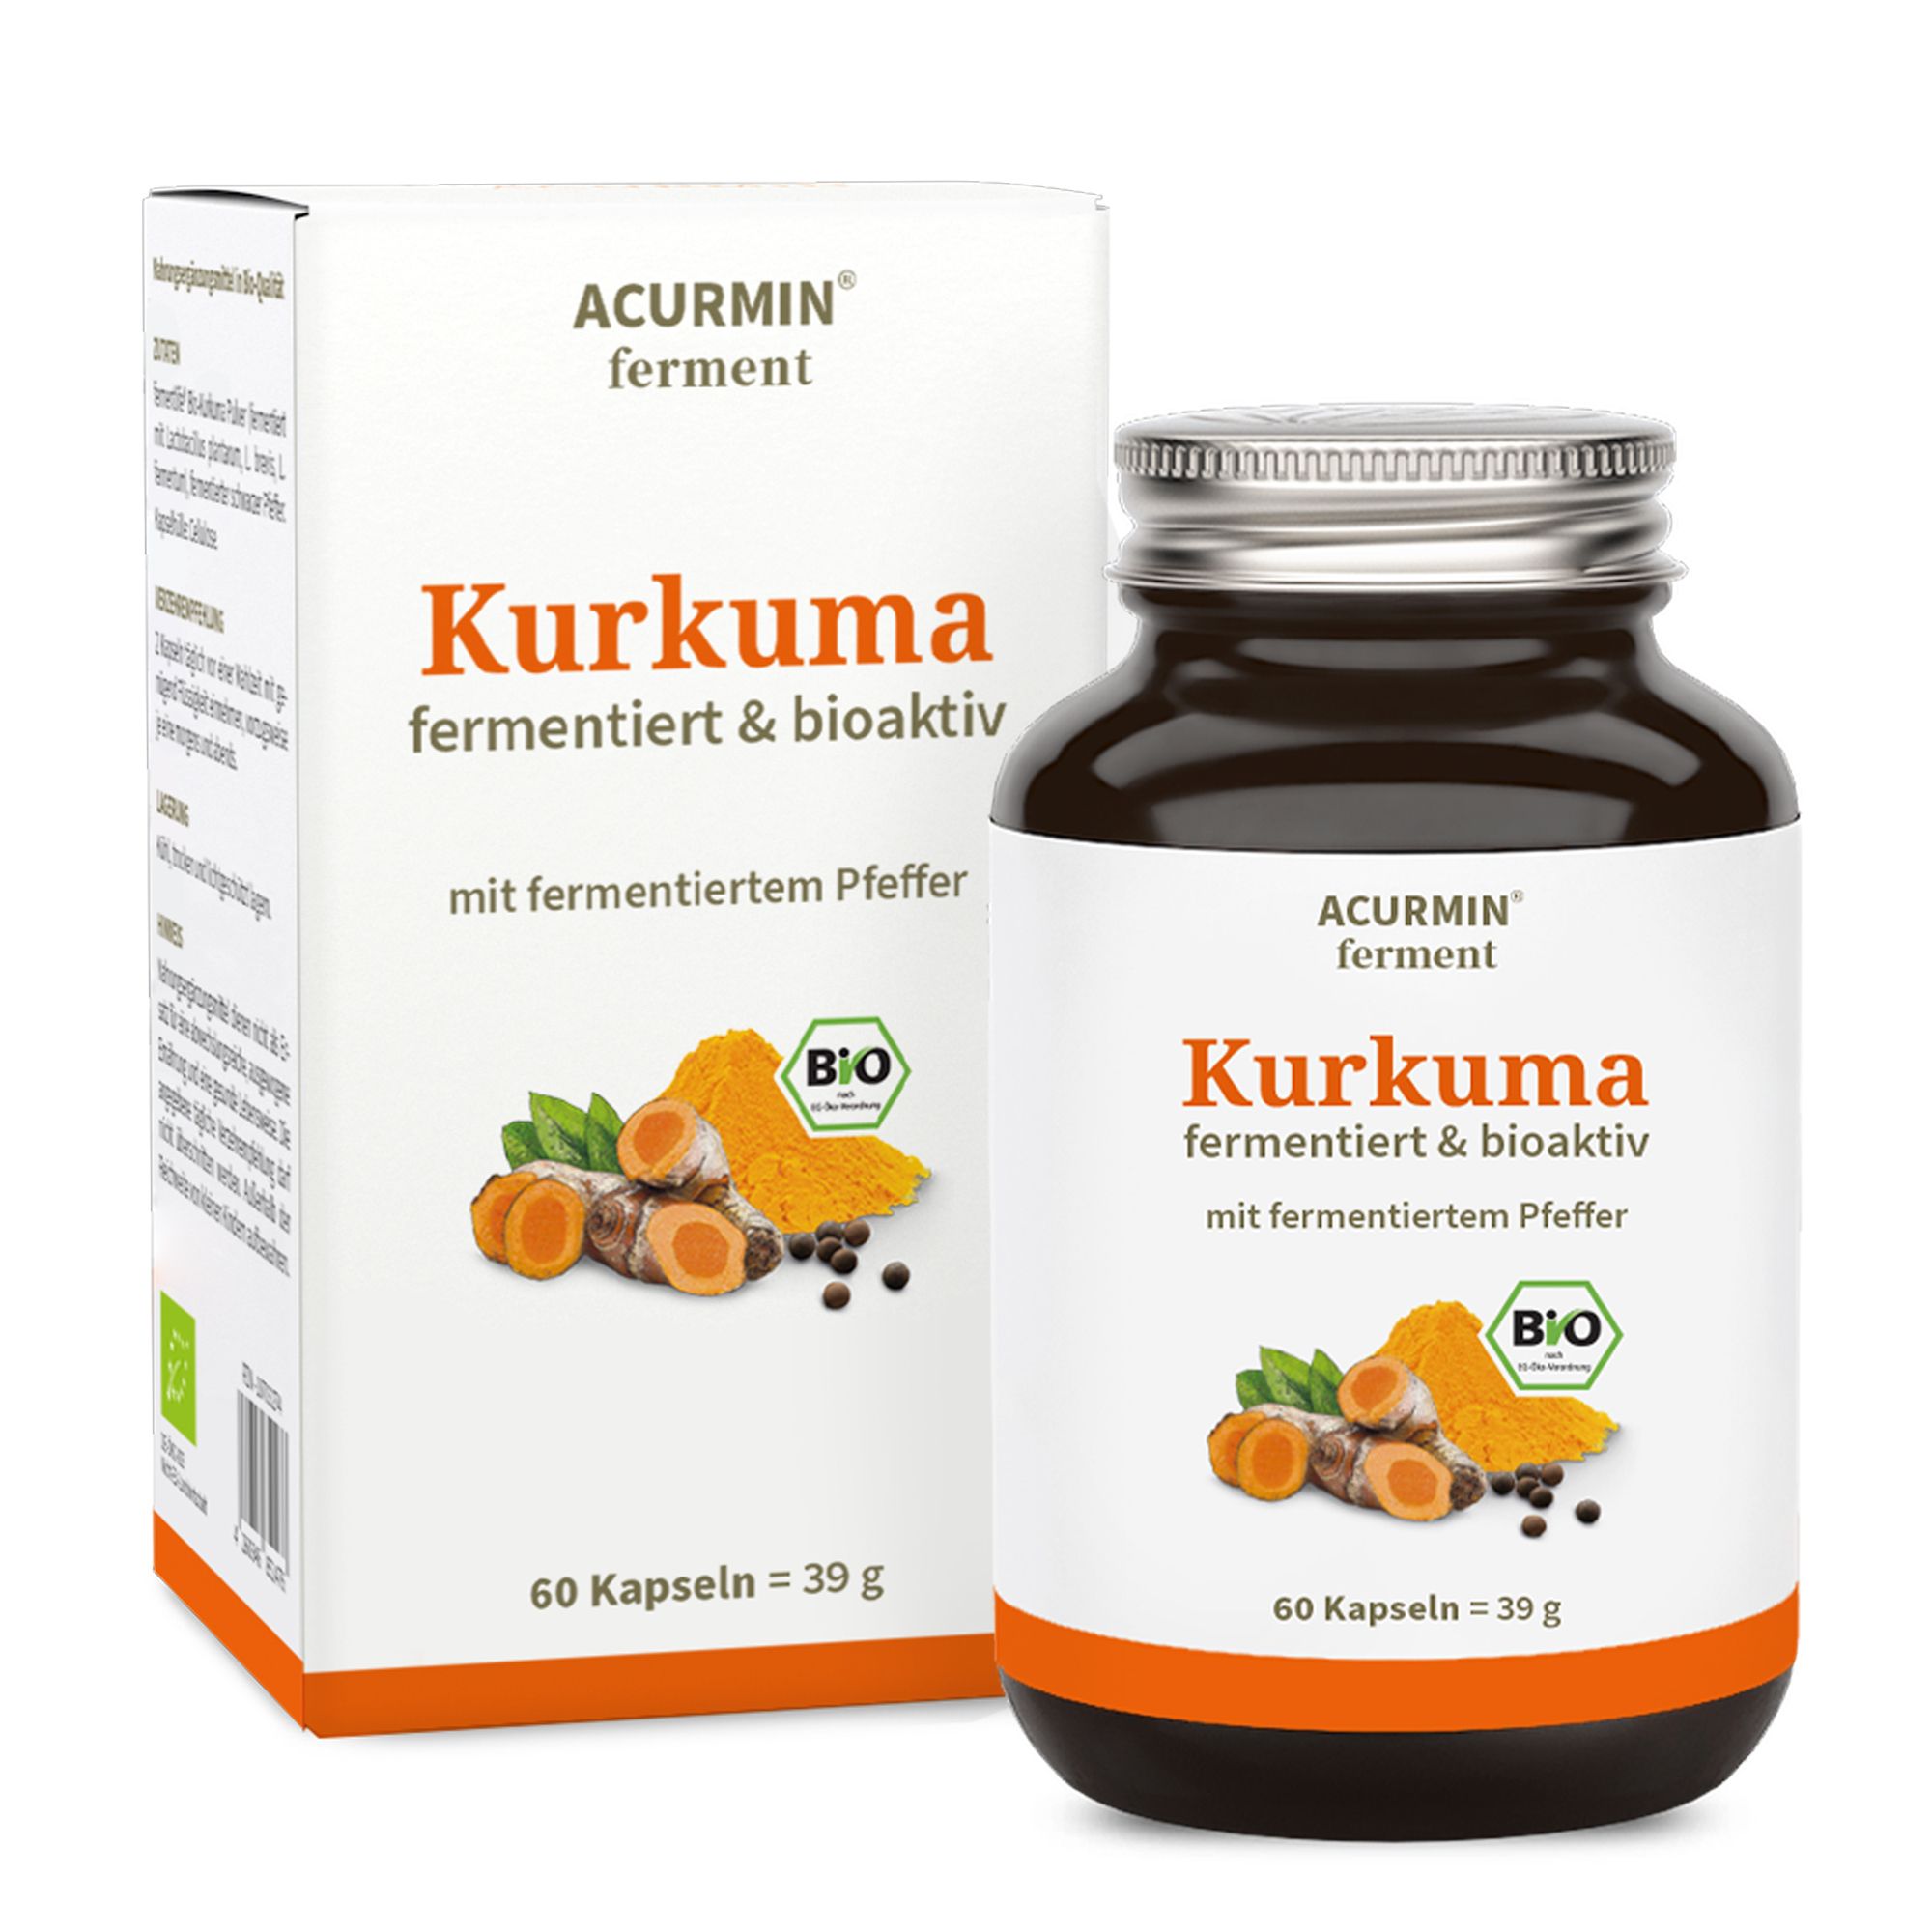 Acurmin® ferment BIO Kurkuma Kapseln - fermentiert und bioaktiv